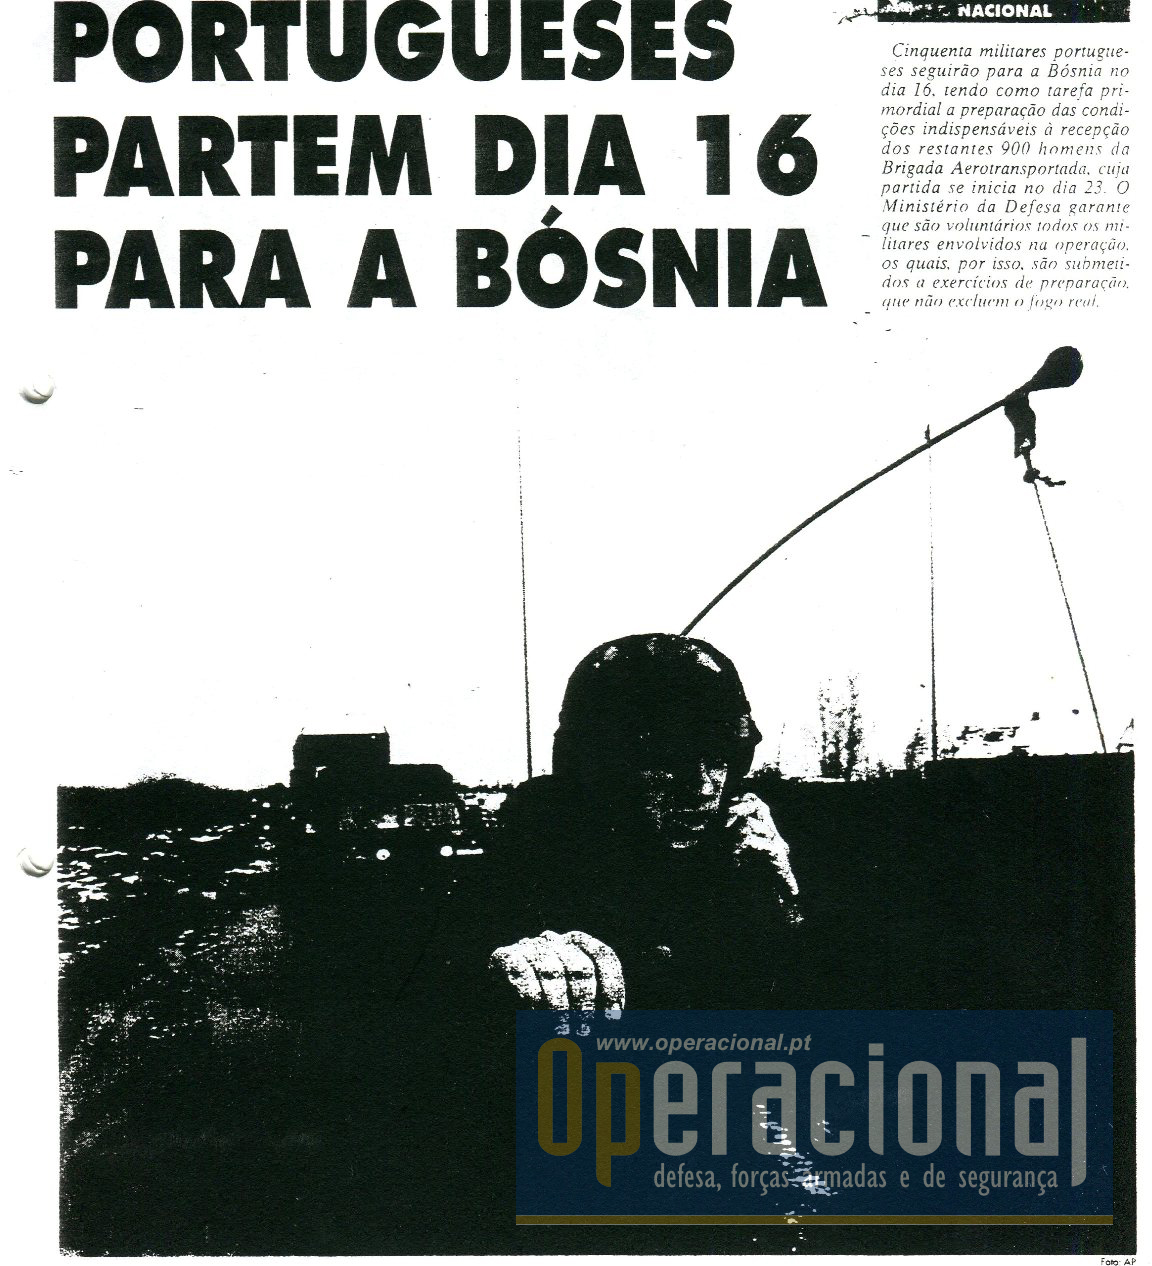 03JAN1996, "Jornal de Noticias"